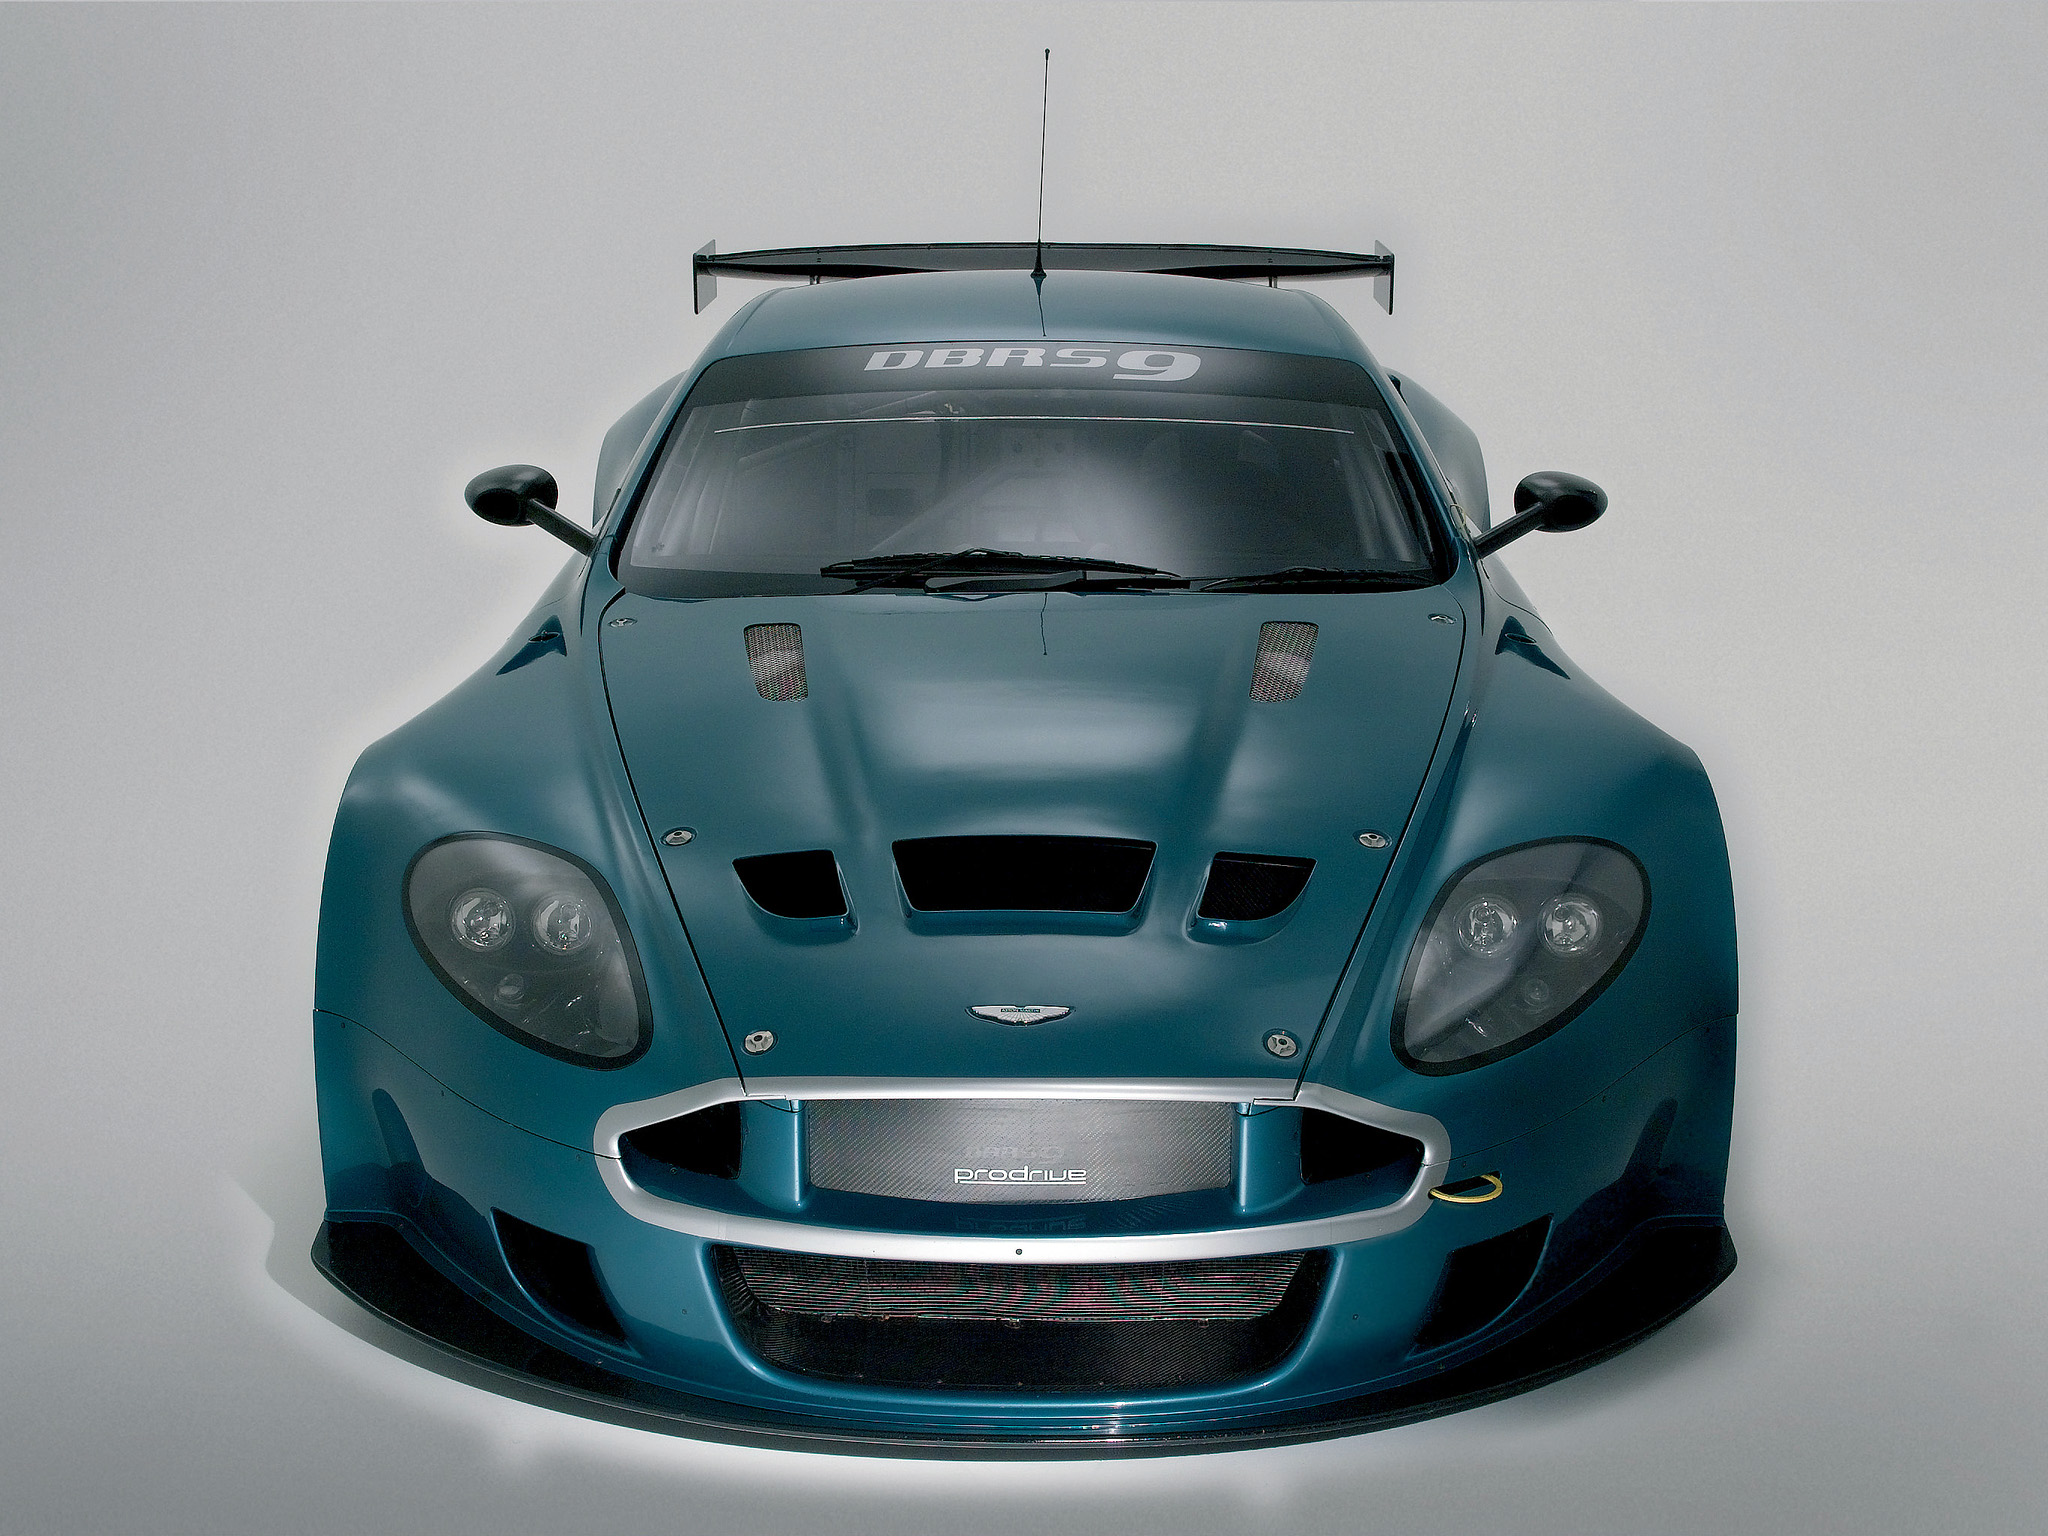 2004, Aston, Martin, Dbrs9, Gt, Race, Racing, G t, Supercar, Supercars Wallpaper